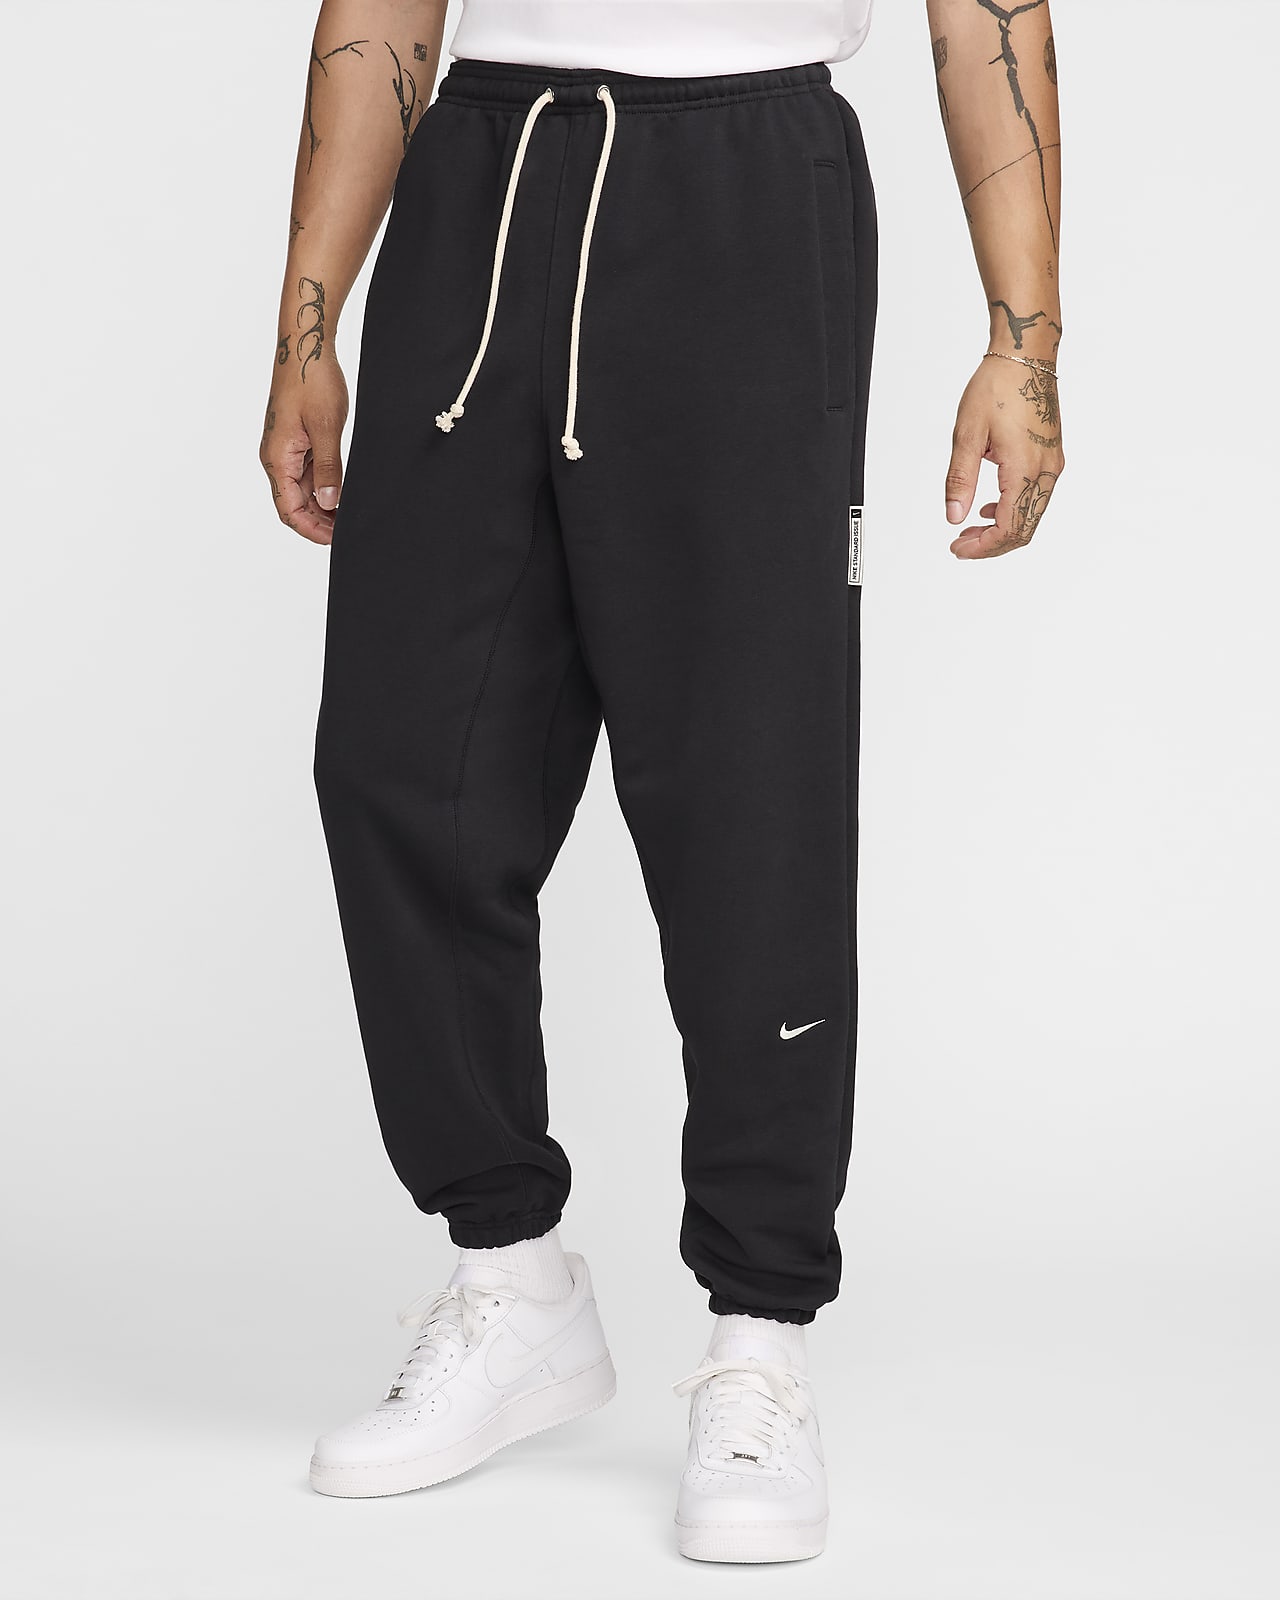 Nike Standard Issue Dri-FIT basketbalbroek voor heren